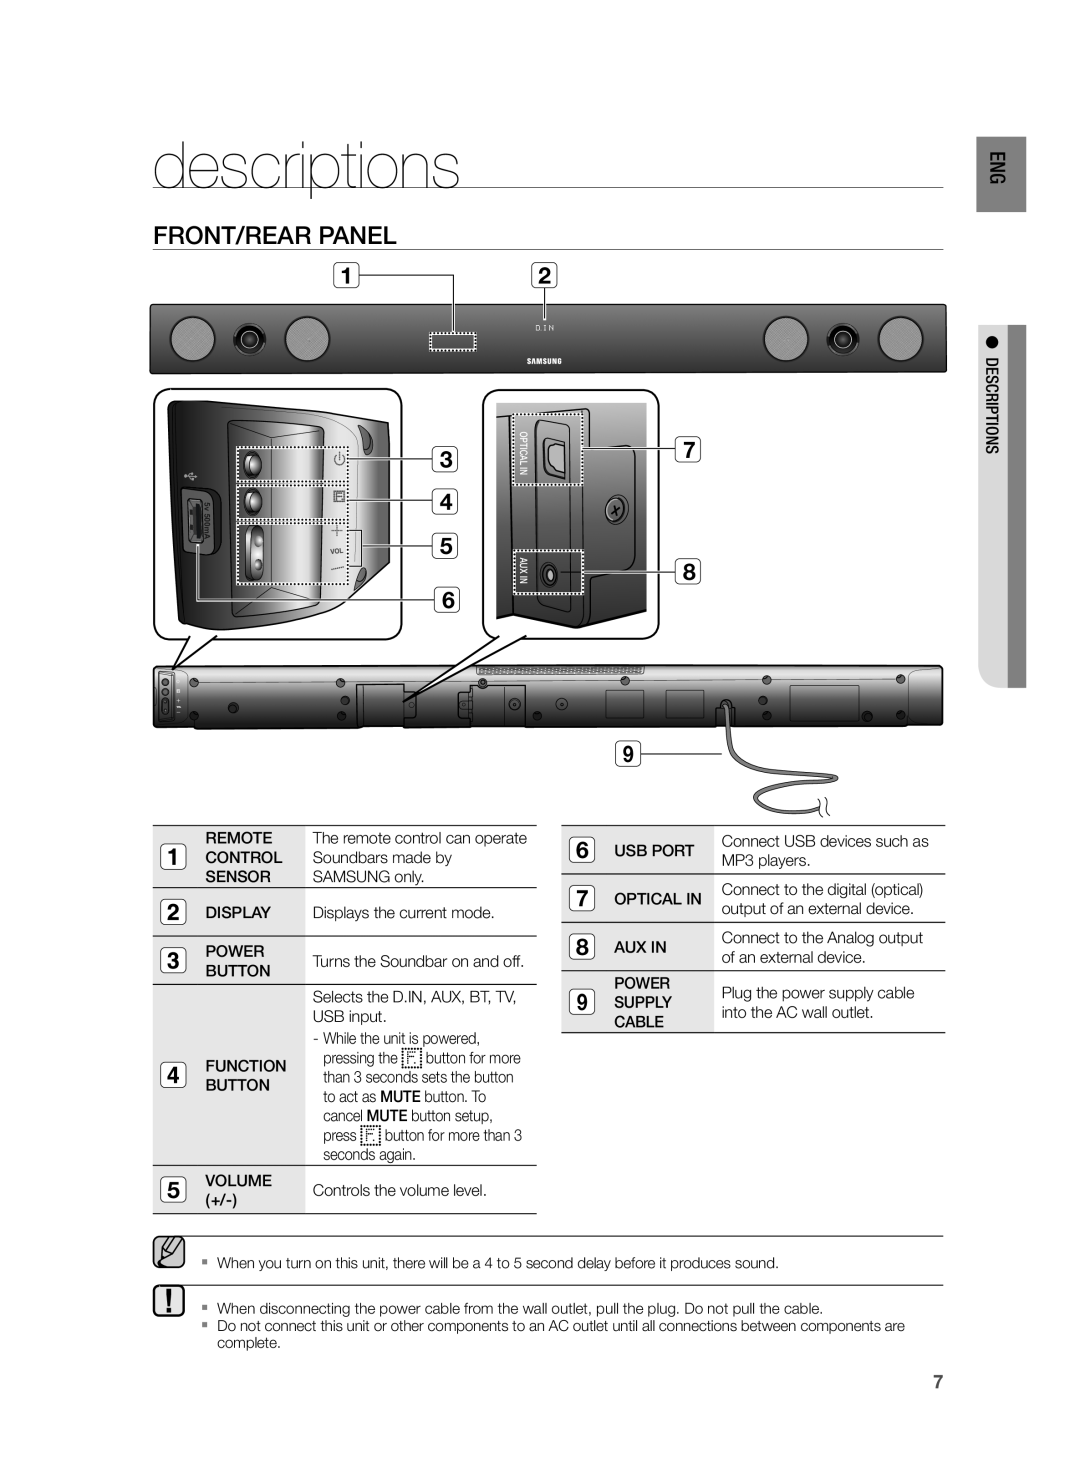 Samsung HW-H430/EN, HW-H430/TK, HW-H430/ZF manual descriptions, Front/Rear Panel 